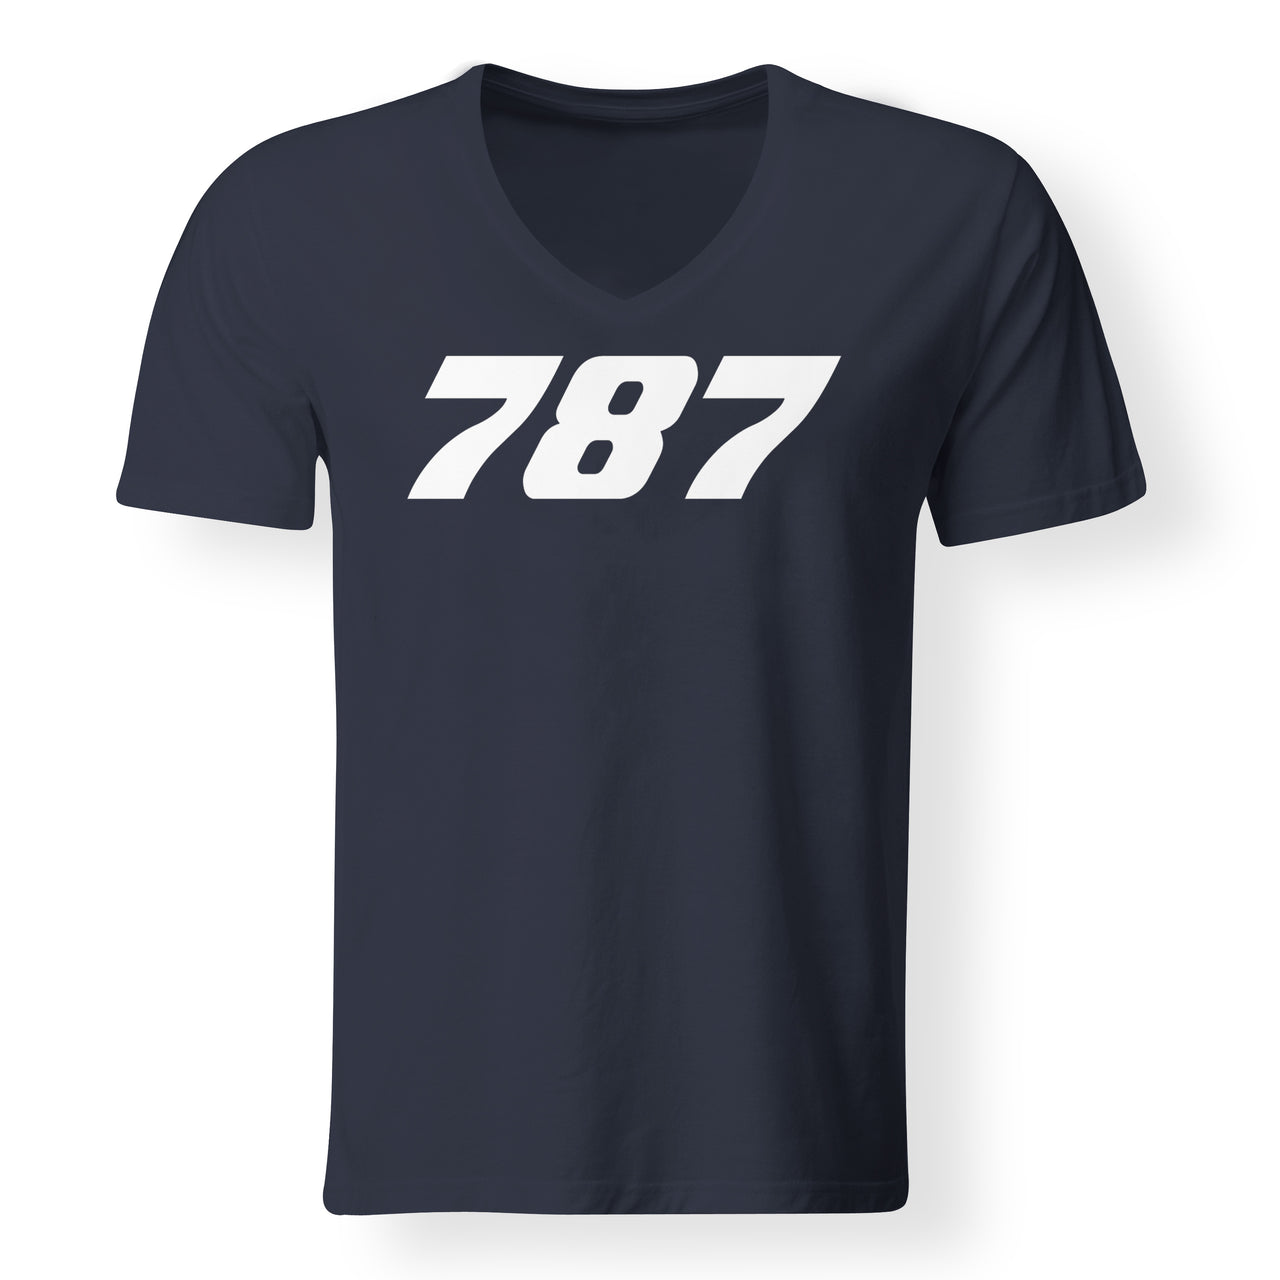 787 Flat Text Designed V-Neck T-Shirts